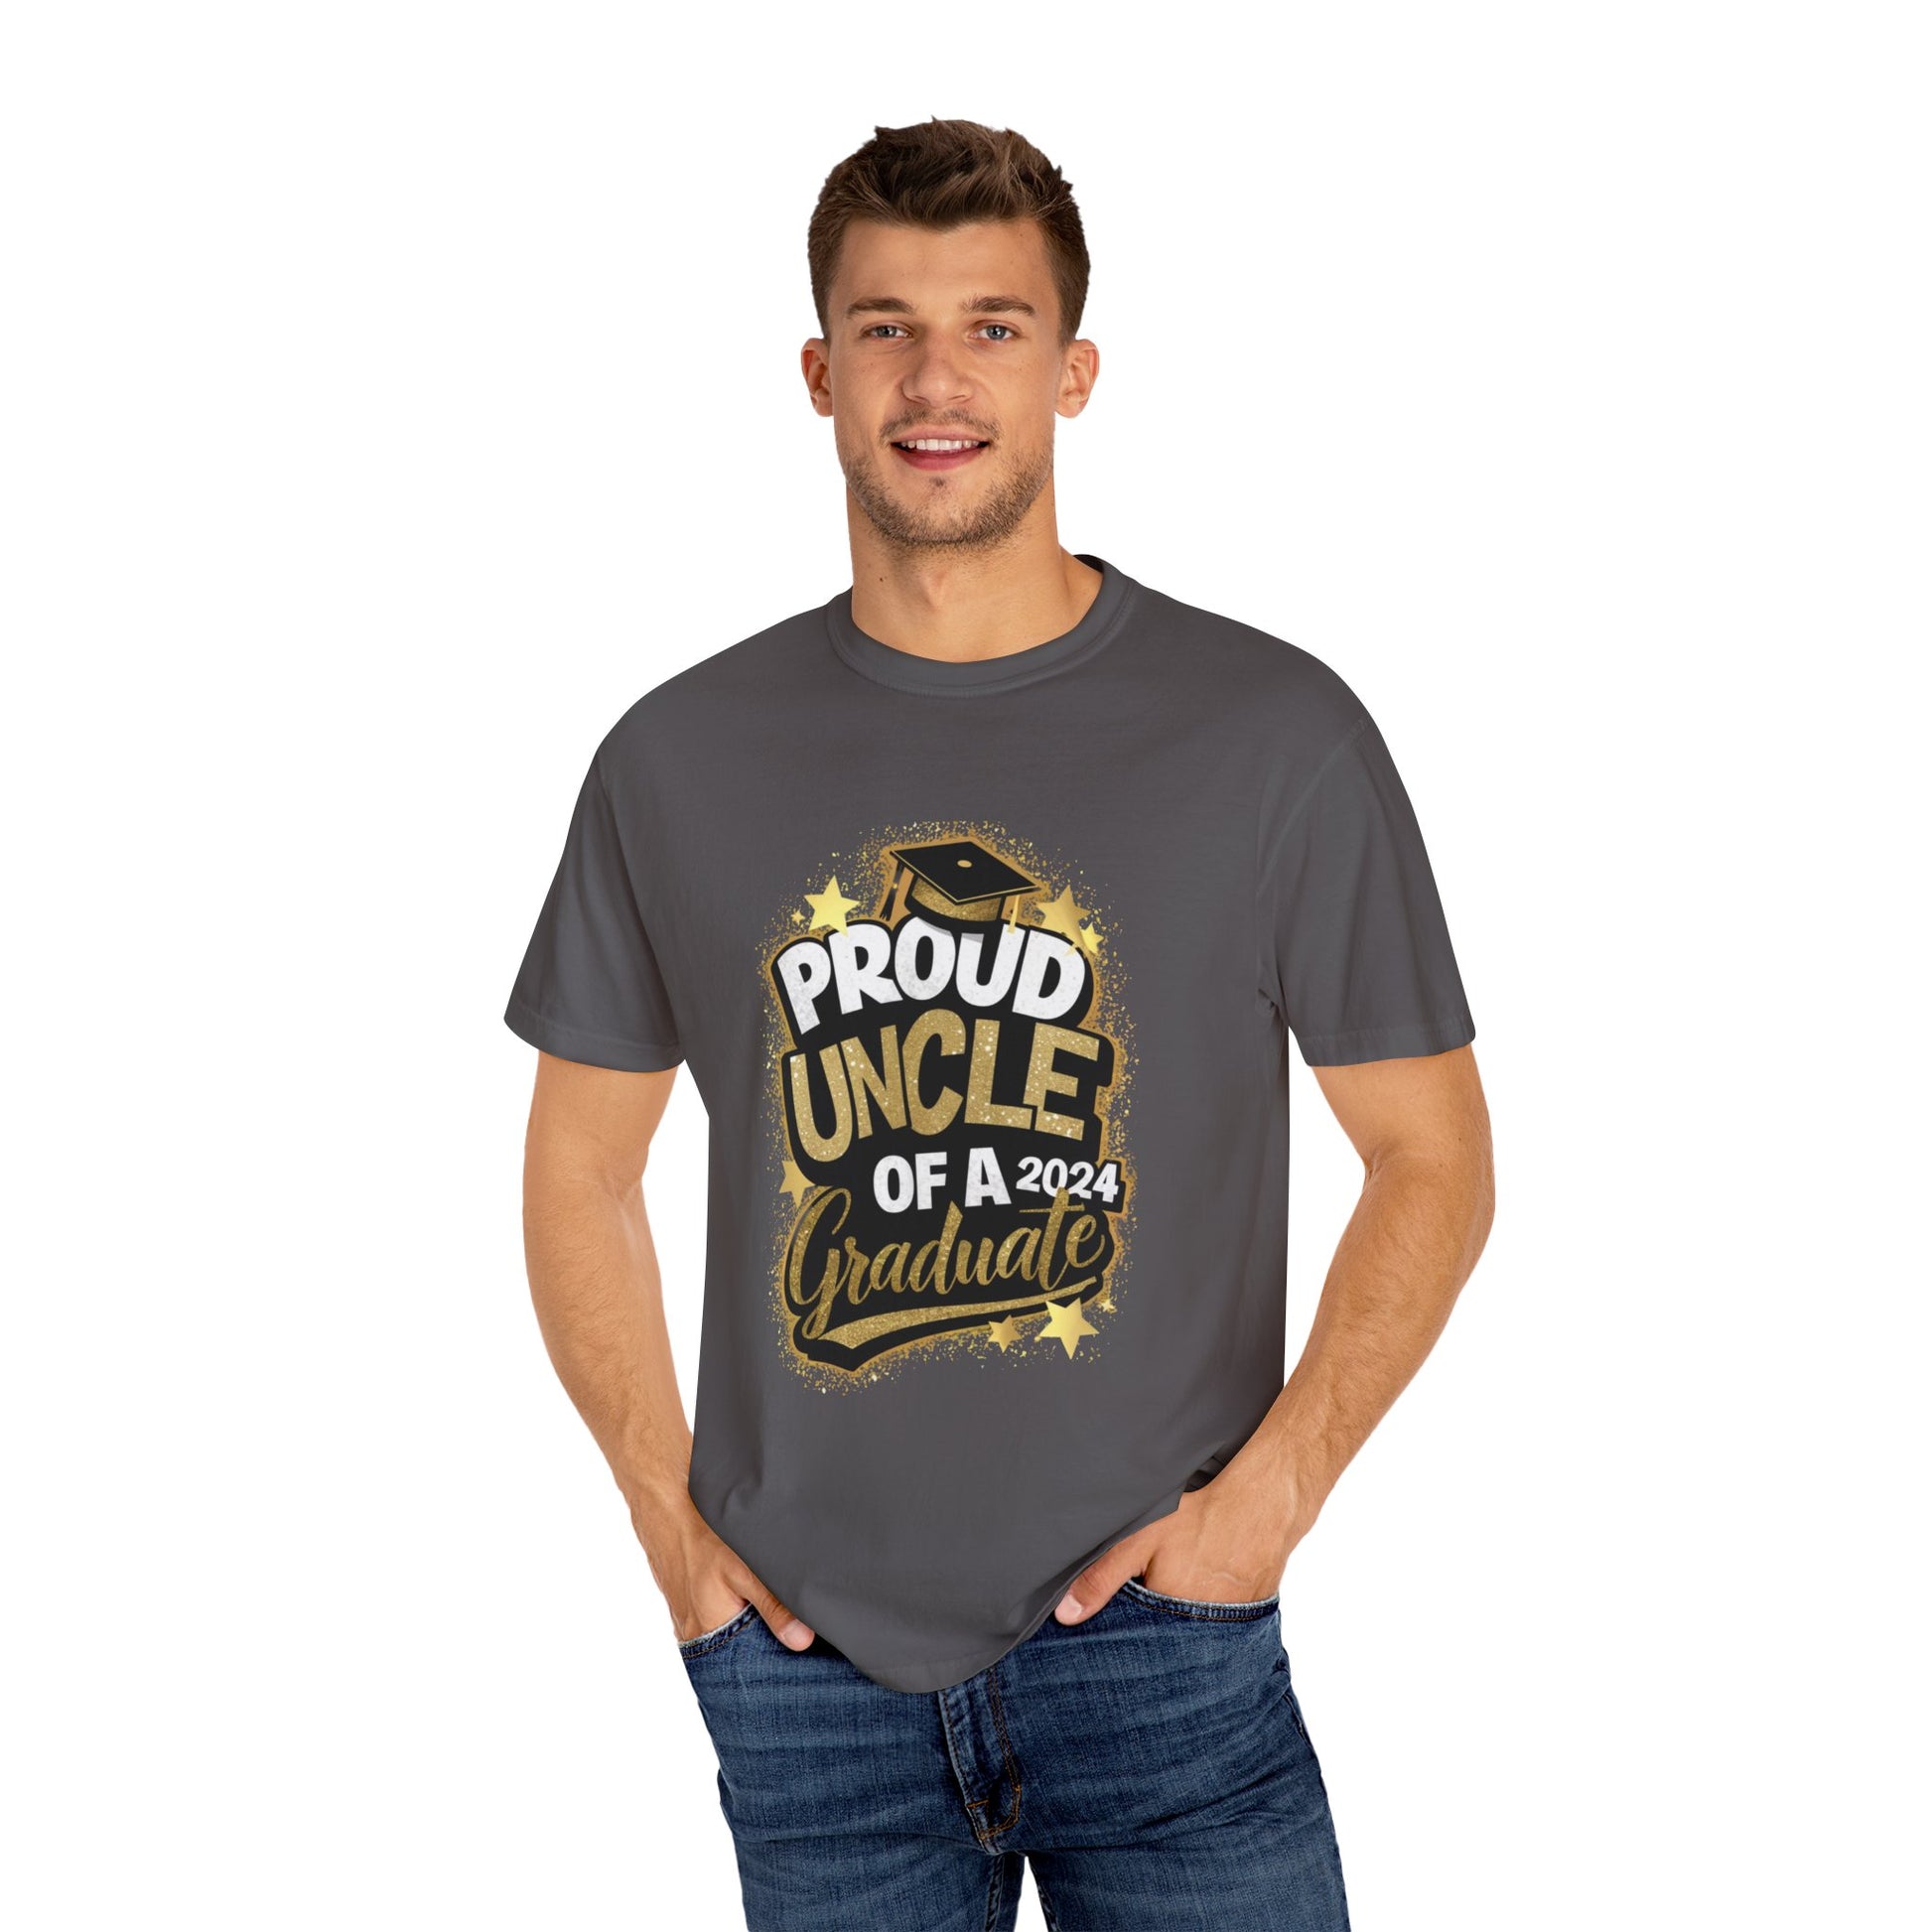 Proud Uncle of a 2024 Graduate Unisex Garment-dyed T-shirt Cotton Funny Humorous Graphic Soft Premium Unisex Men Women Graphite T-shirt Birthday Gift-39